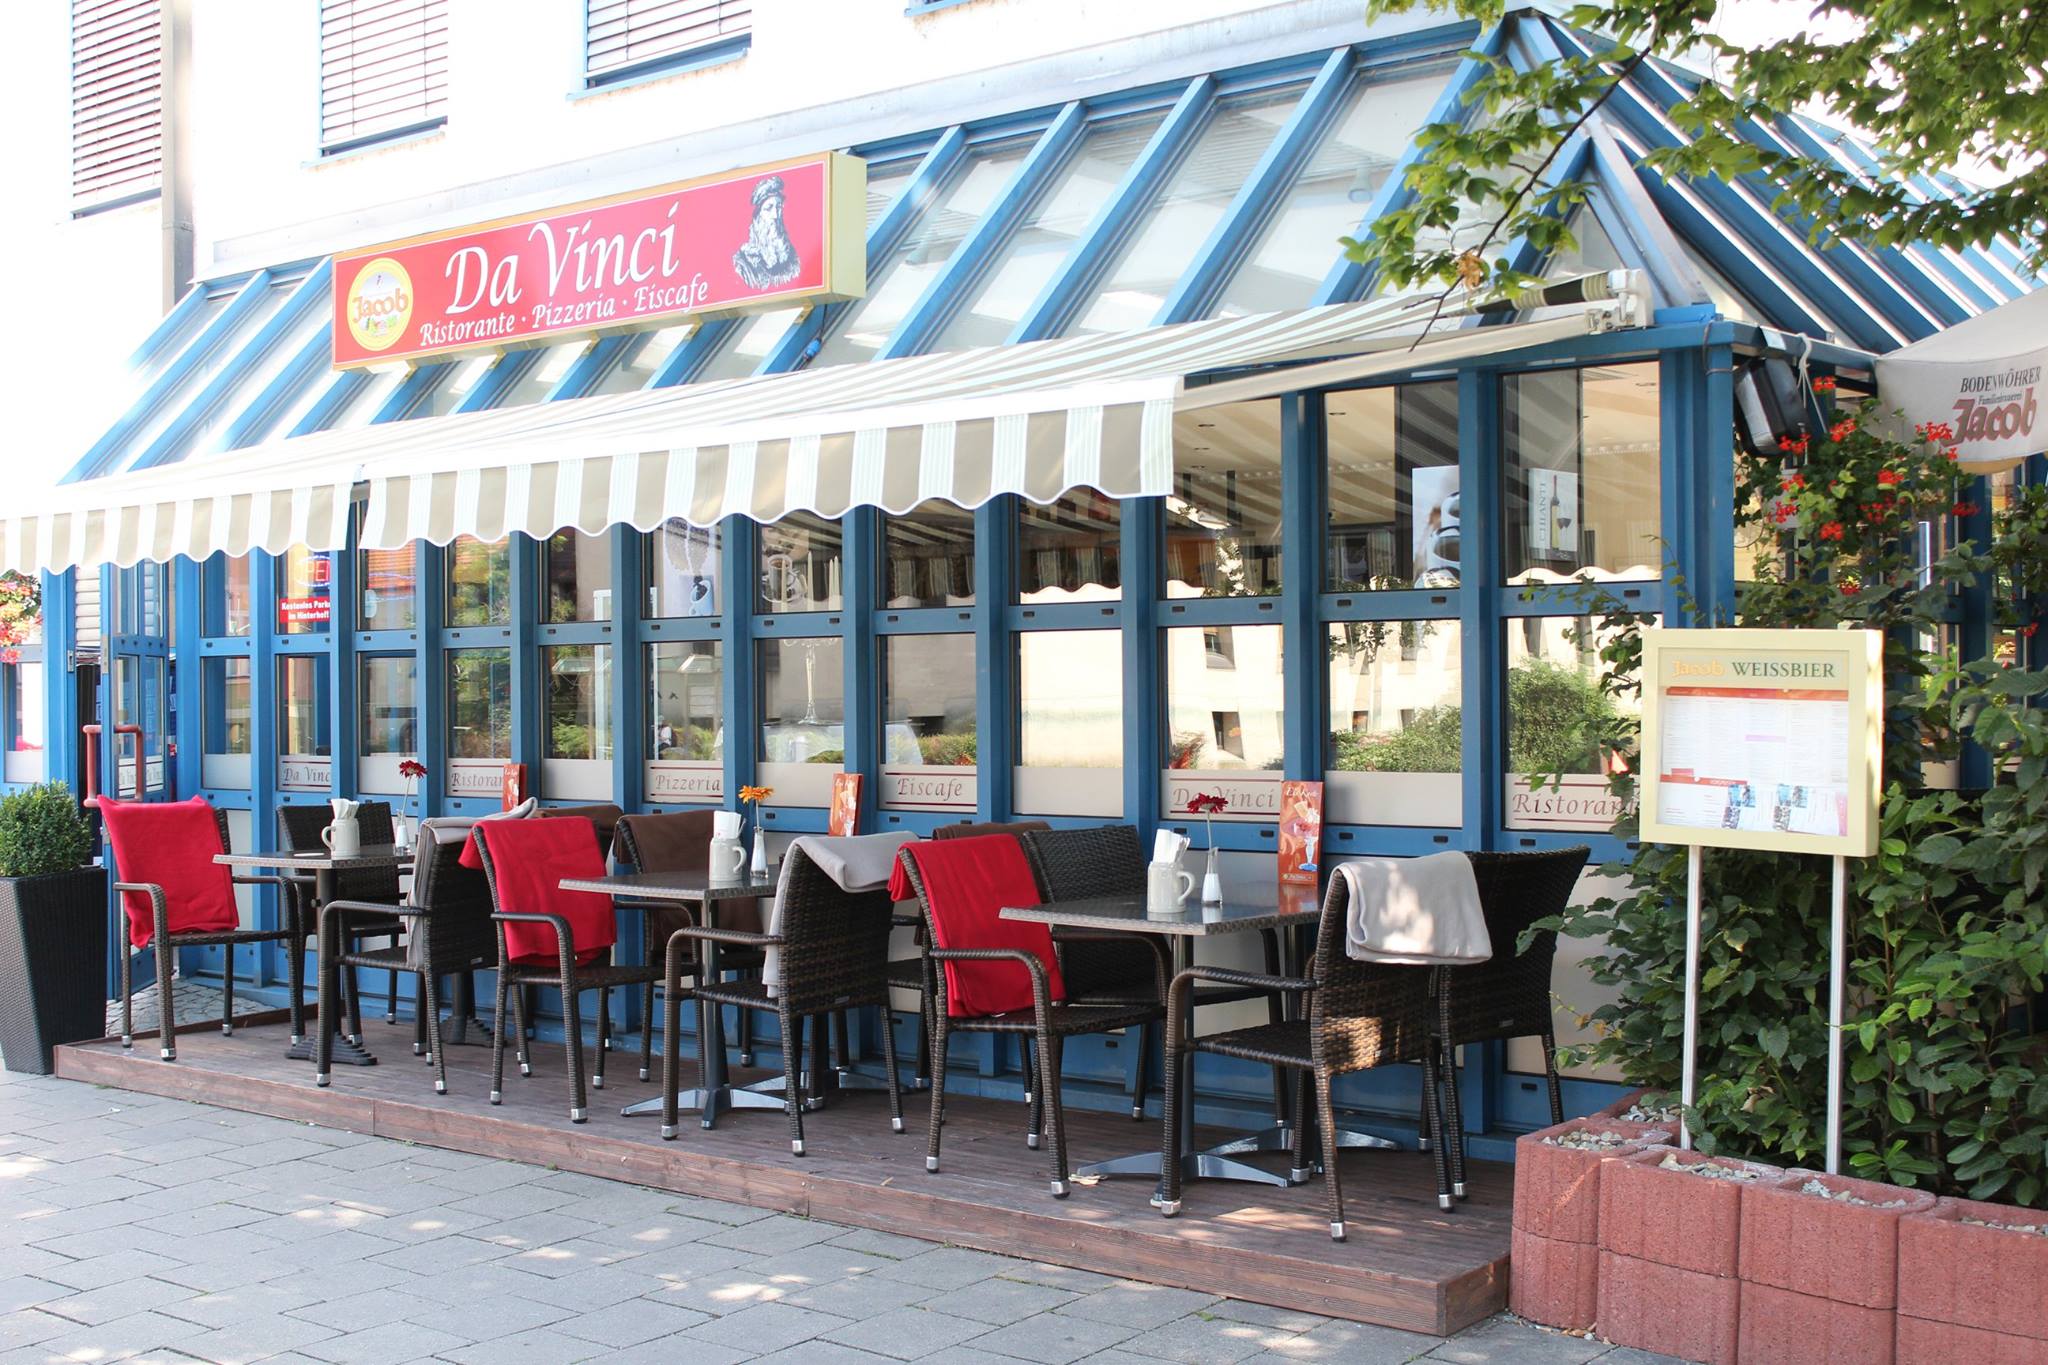 Da Vinci - Ristorante Pizzeria Eiscafe